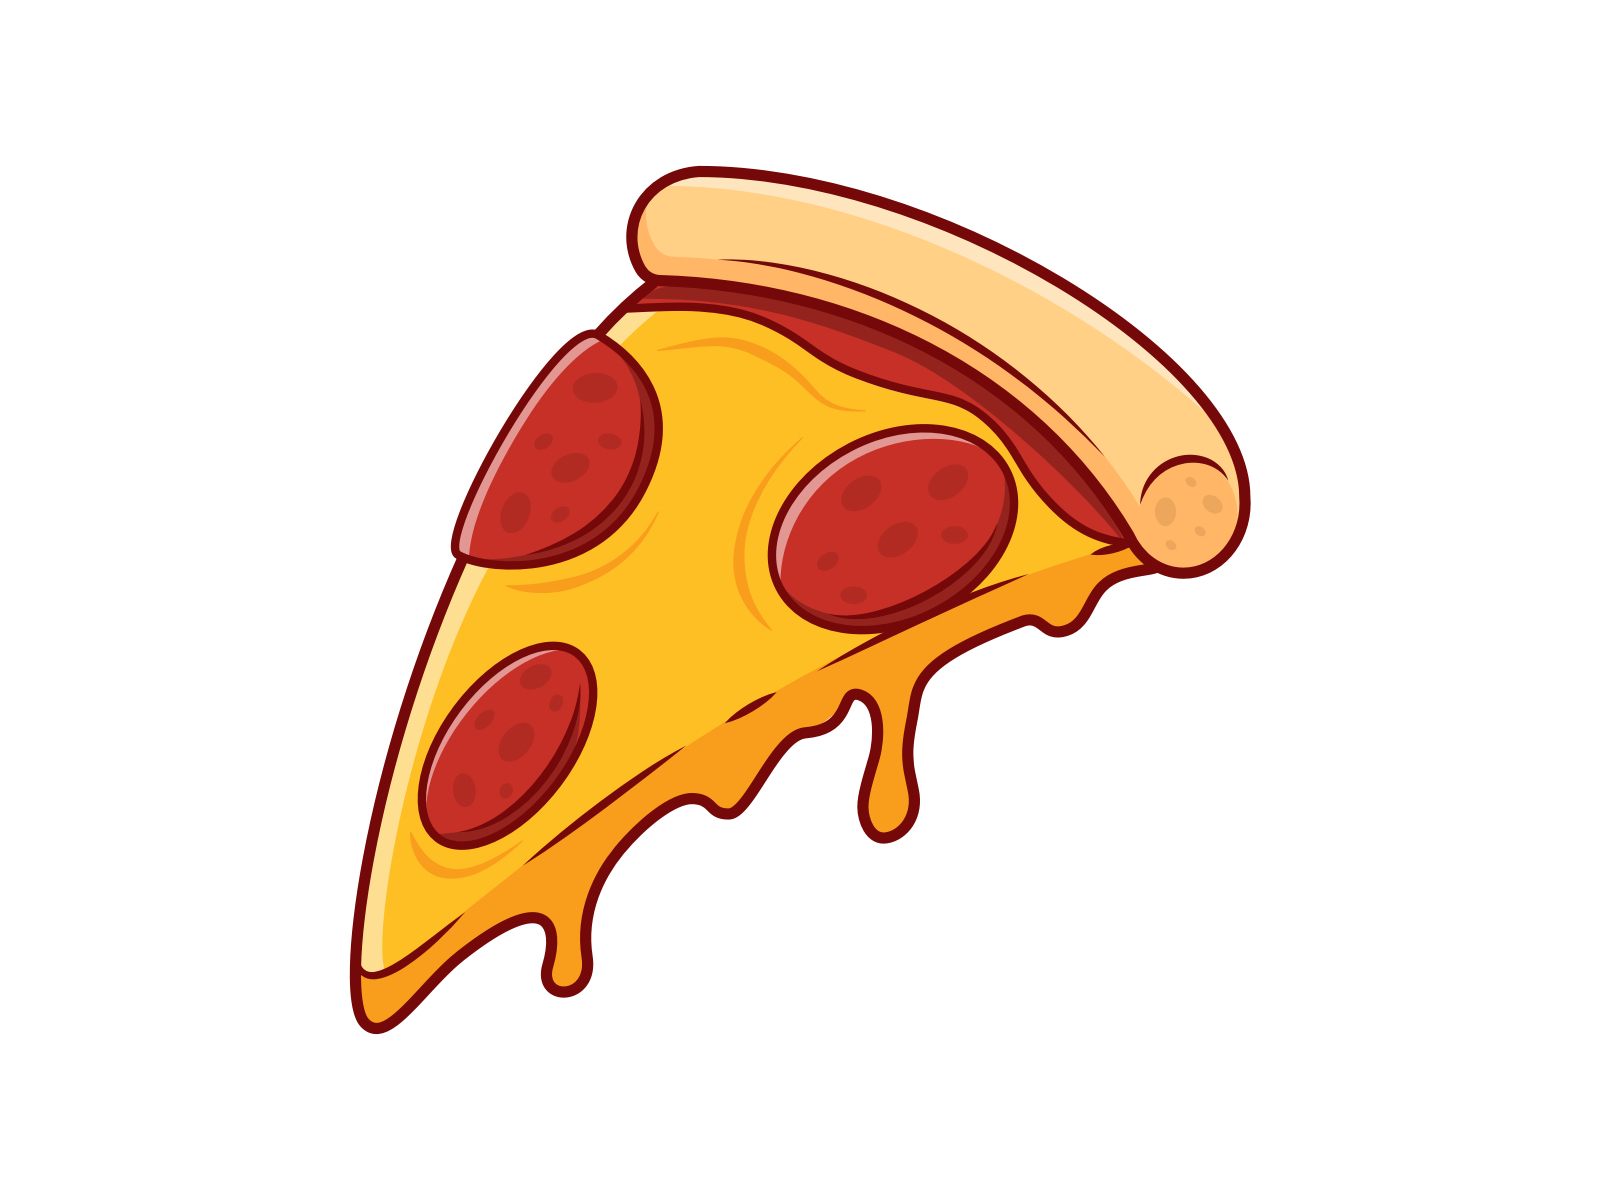 pizza-slice-by-mattis-b-dtker-on-dribbble